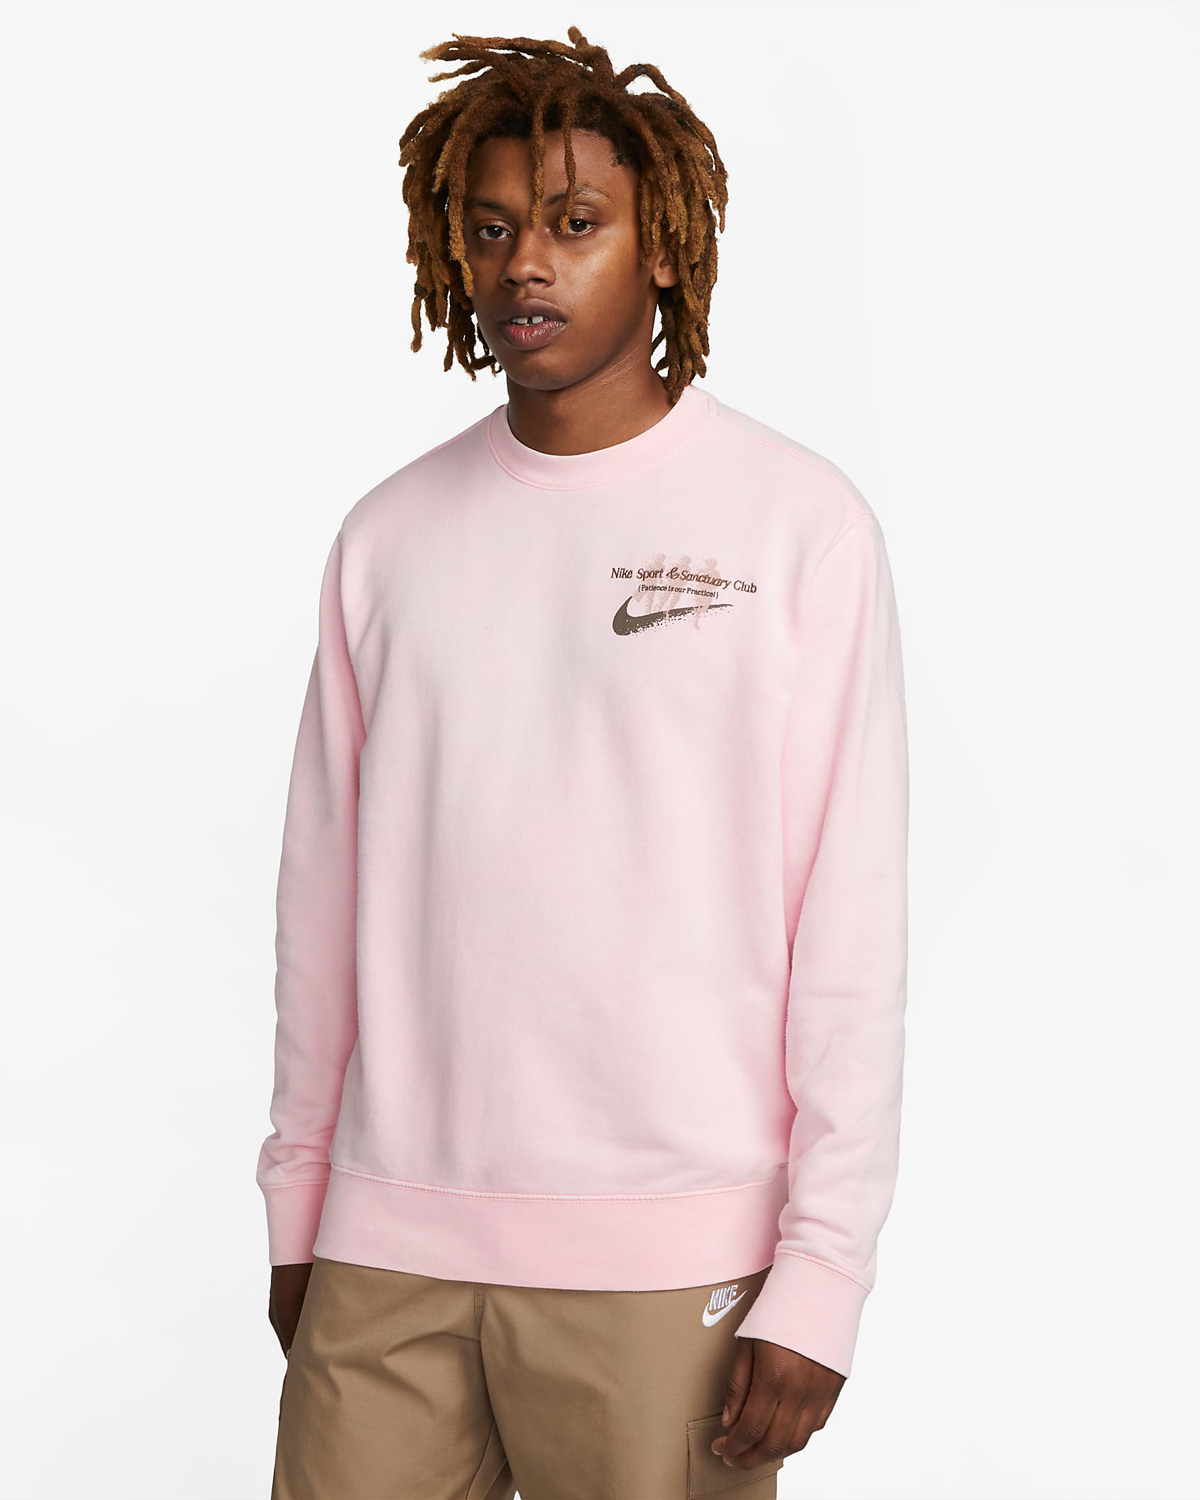 Nike-Club-Fleece-Crew-Sweatshirt-Medium-Soft-Pink-1